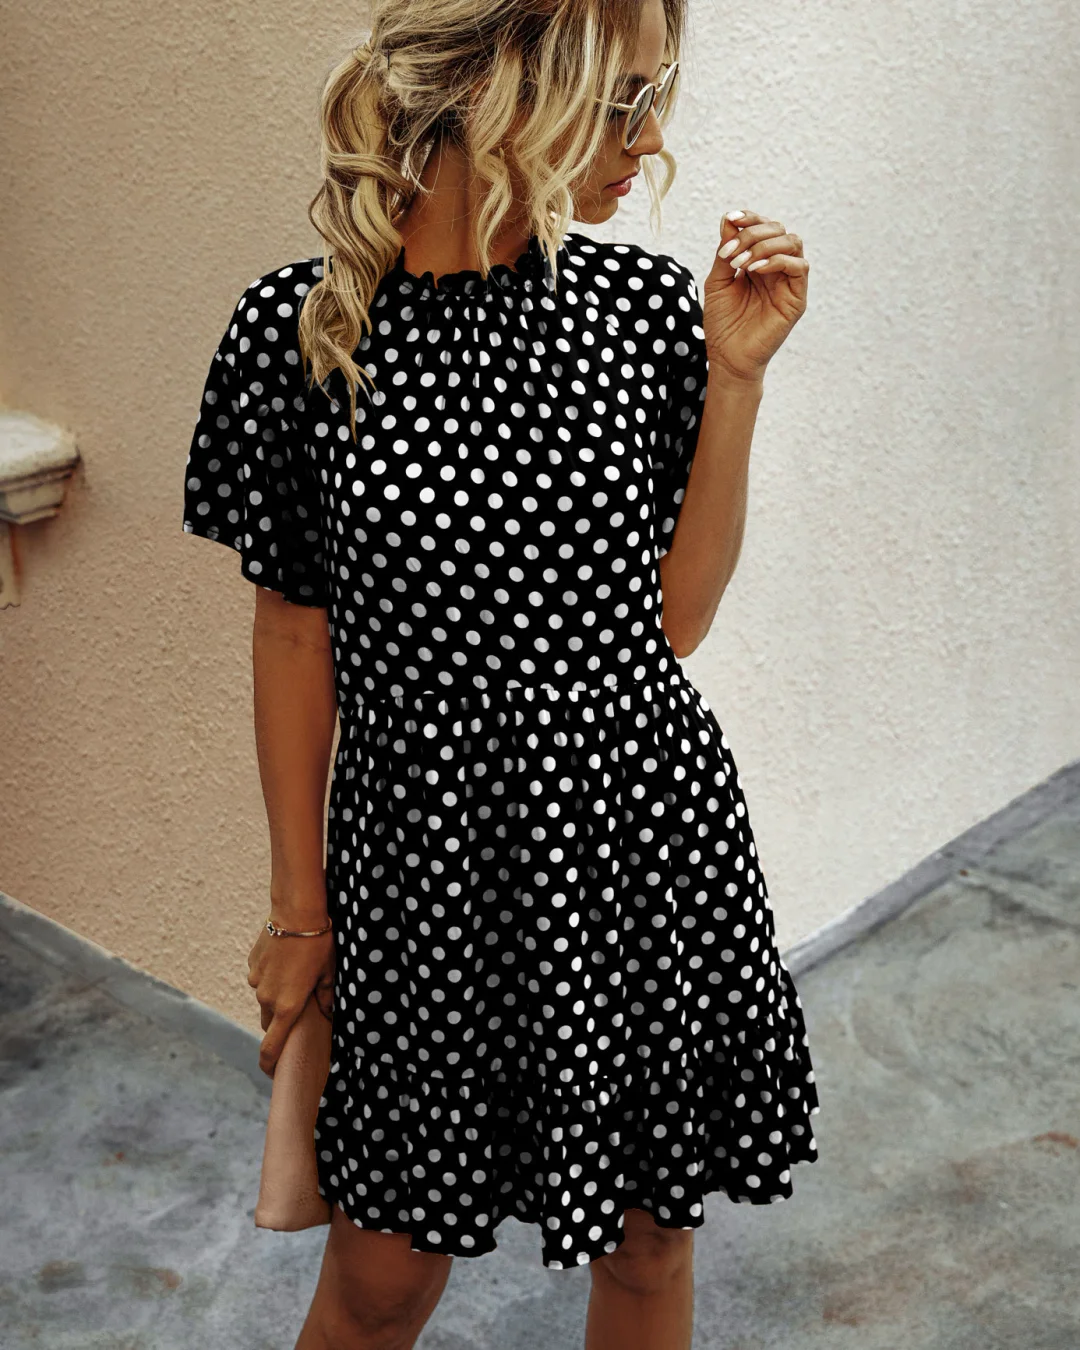 Fashionable Polka Dot Women's Dress For Summer